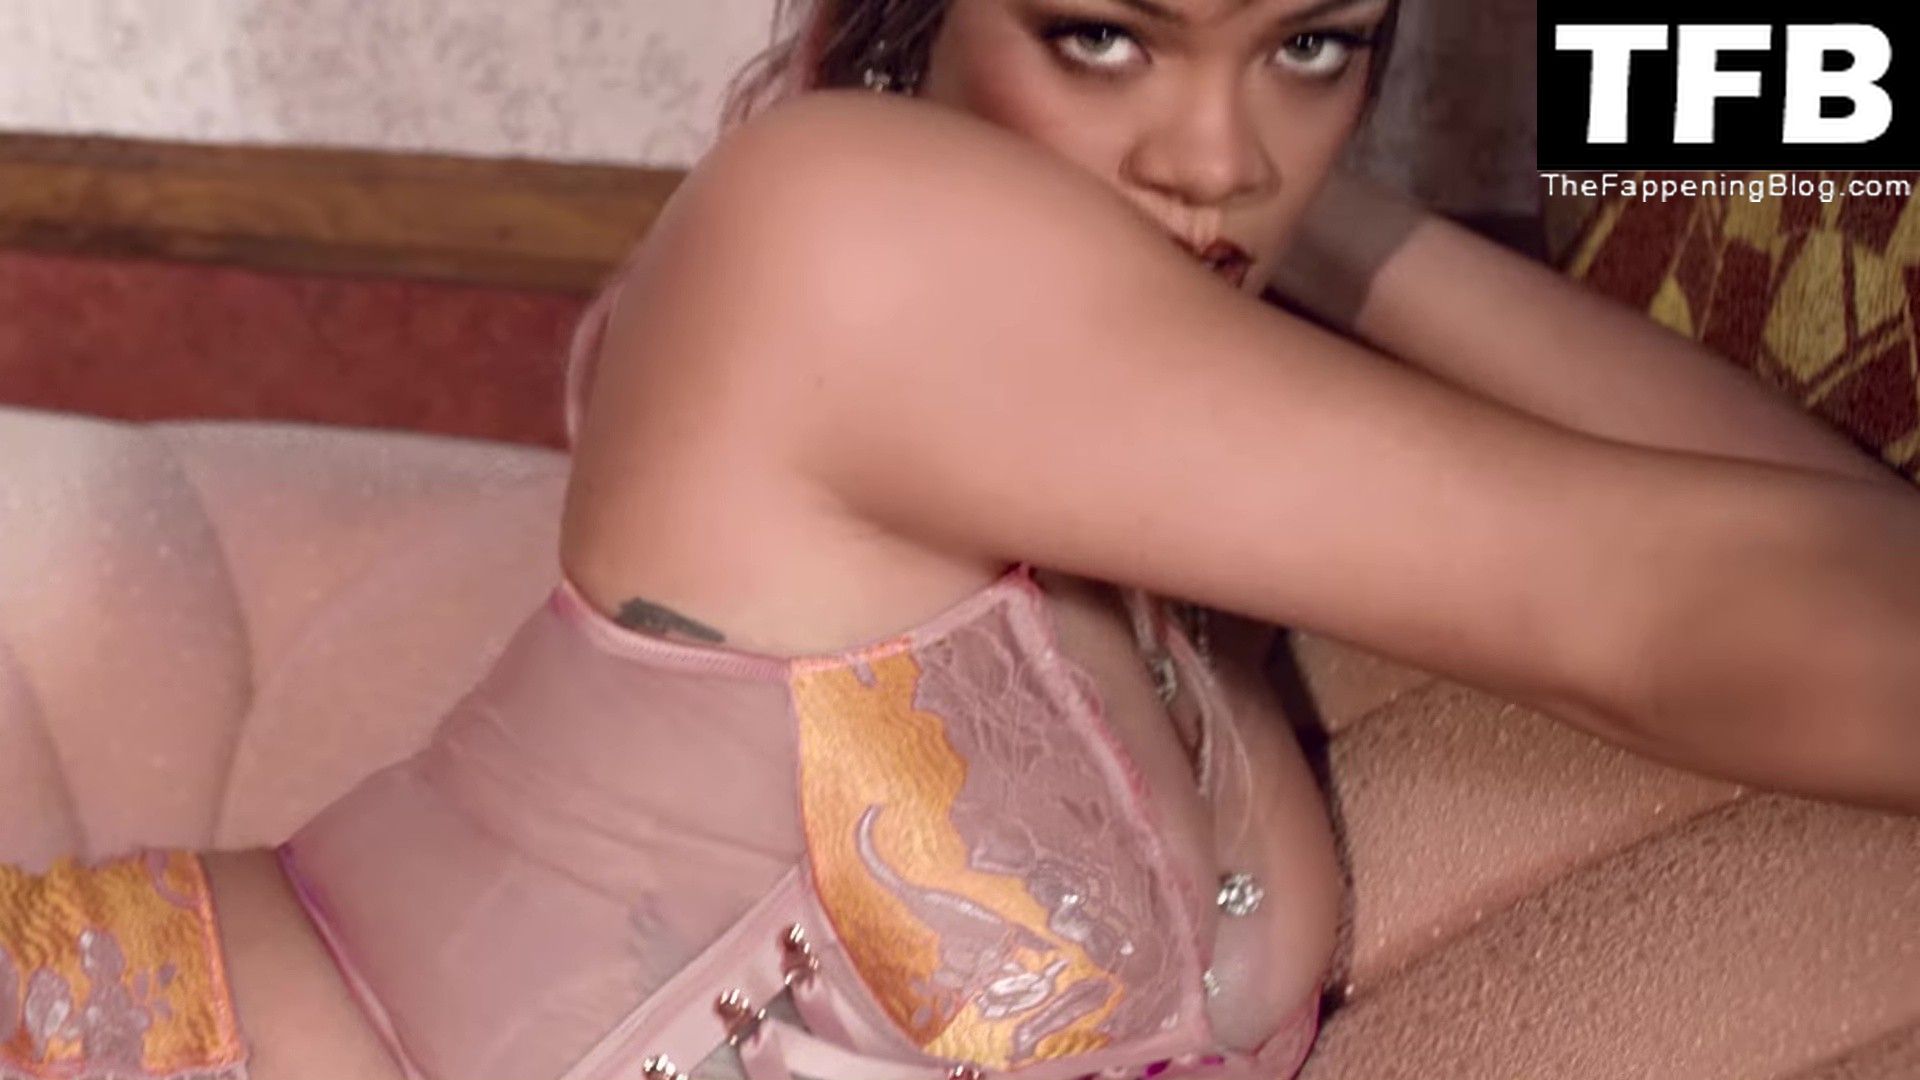 Rihanna-Gorgeous-Body-in-Lingerie-12-thefappeningblog.com_.jpg